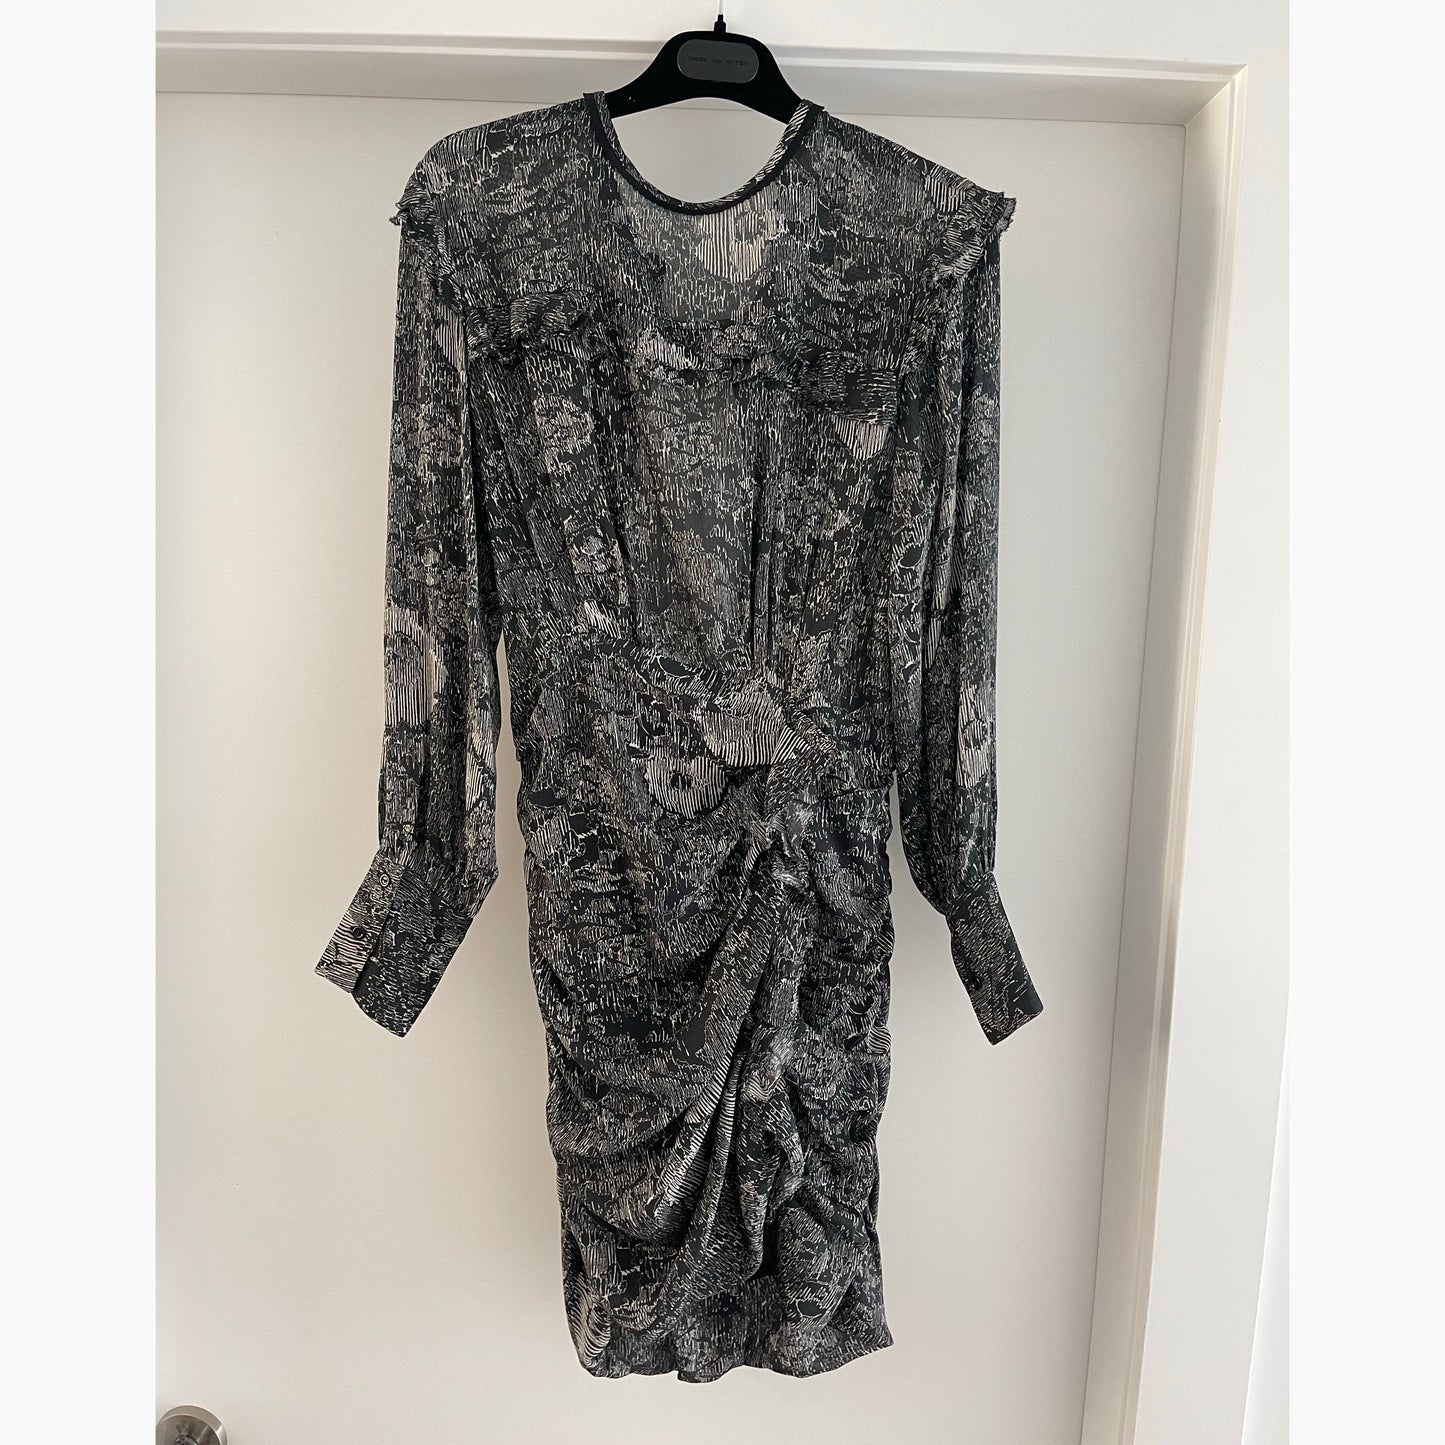 Isabel Marant "IRVIN" Printed Silk Dress, size 38 (fits like a slim size 4)